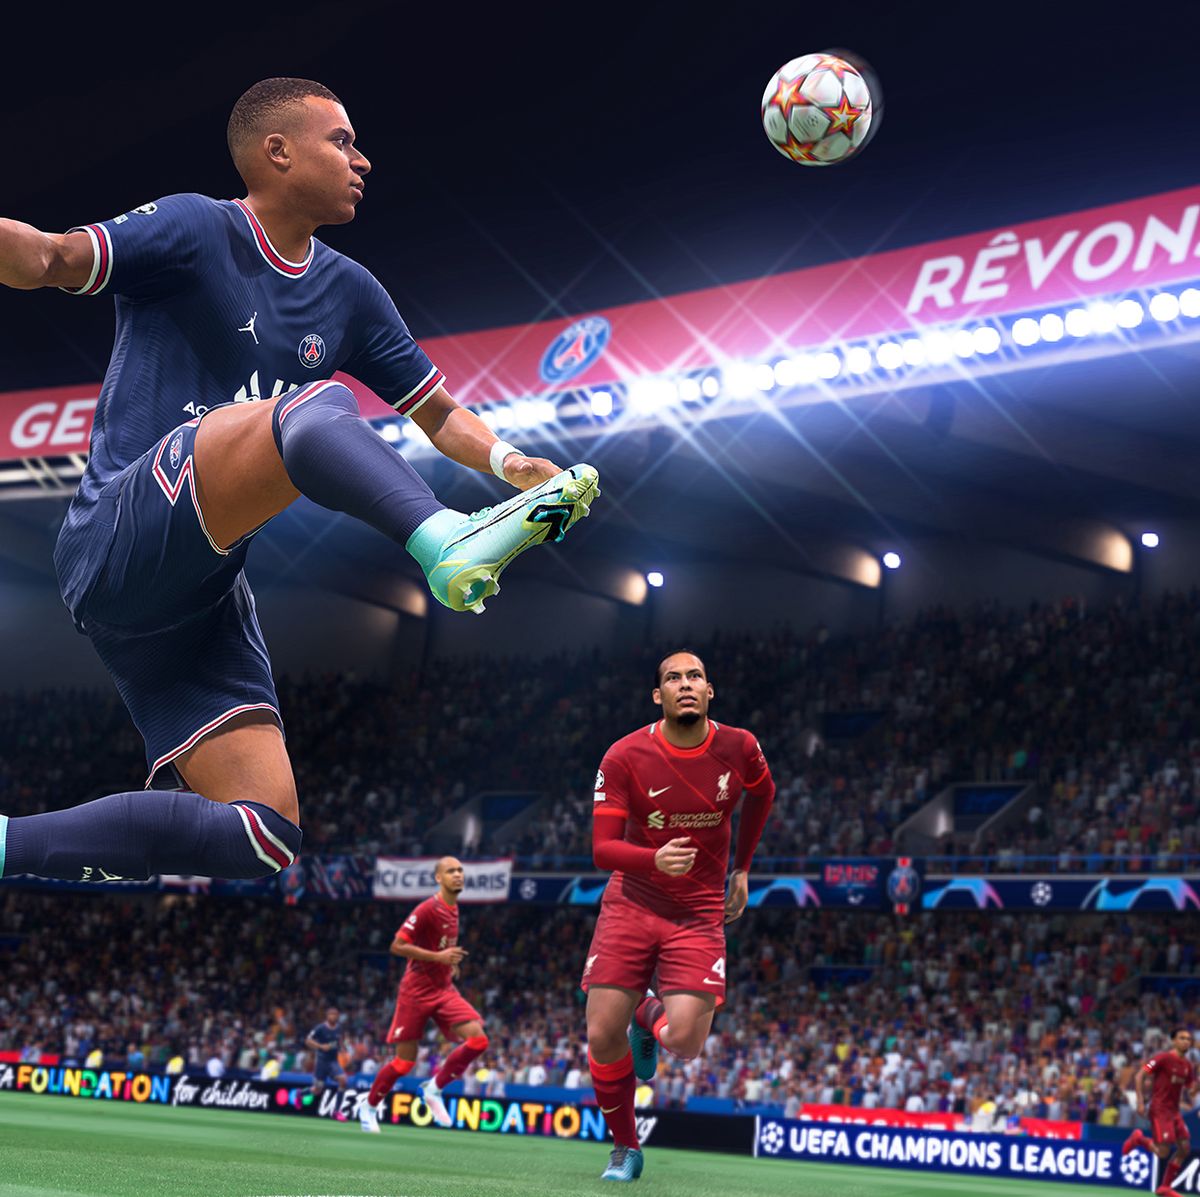 FIFA 22 Ultimate Edition - PC Digital [Origin] 